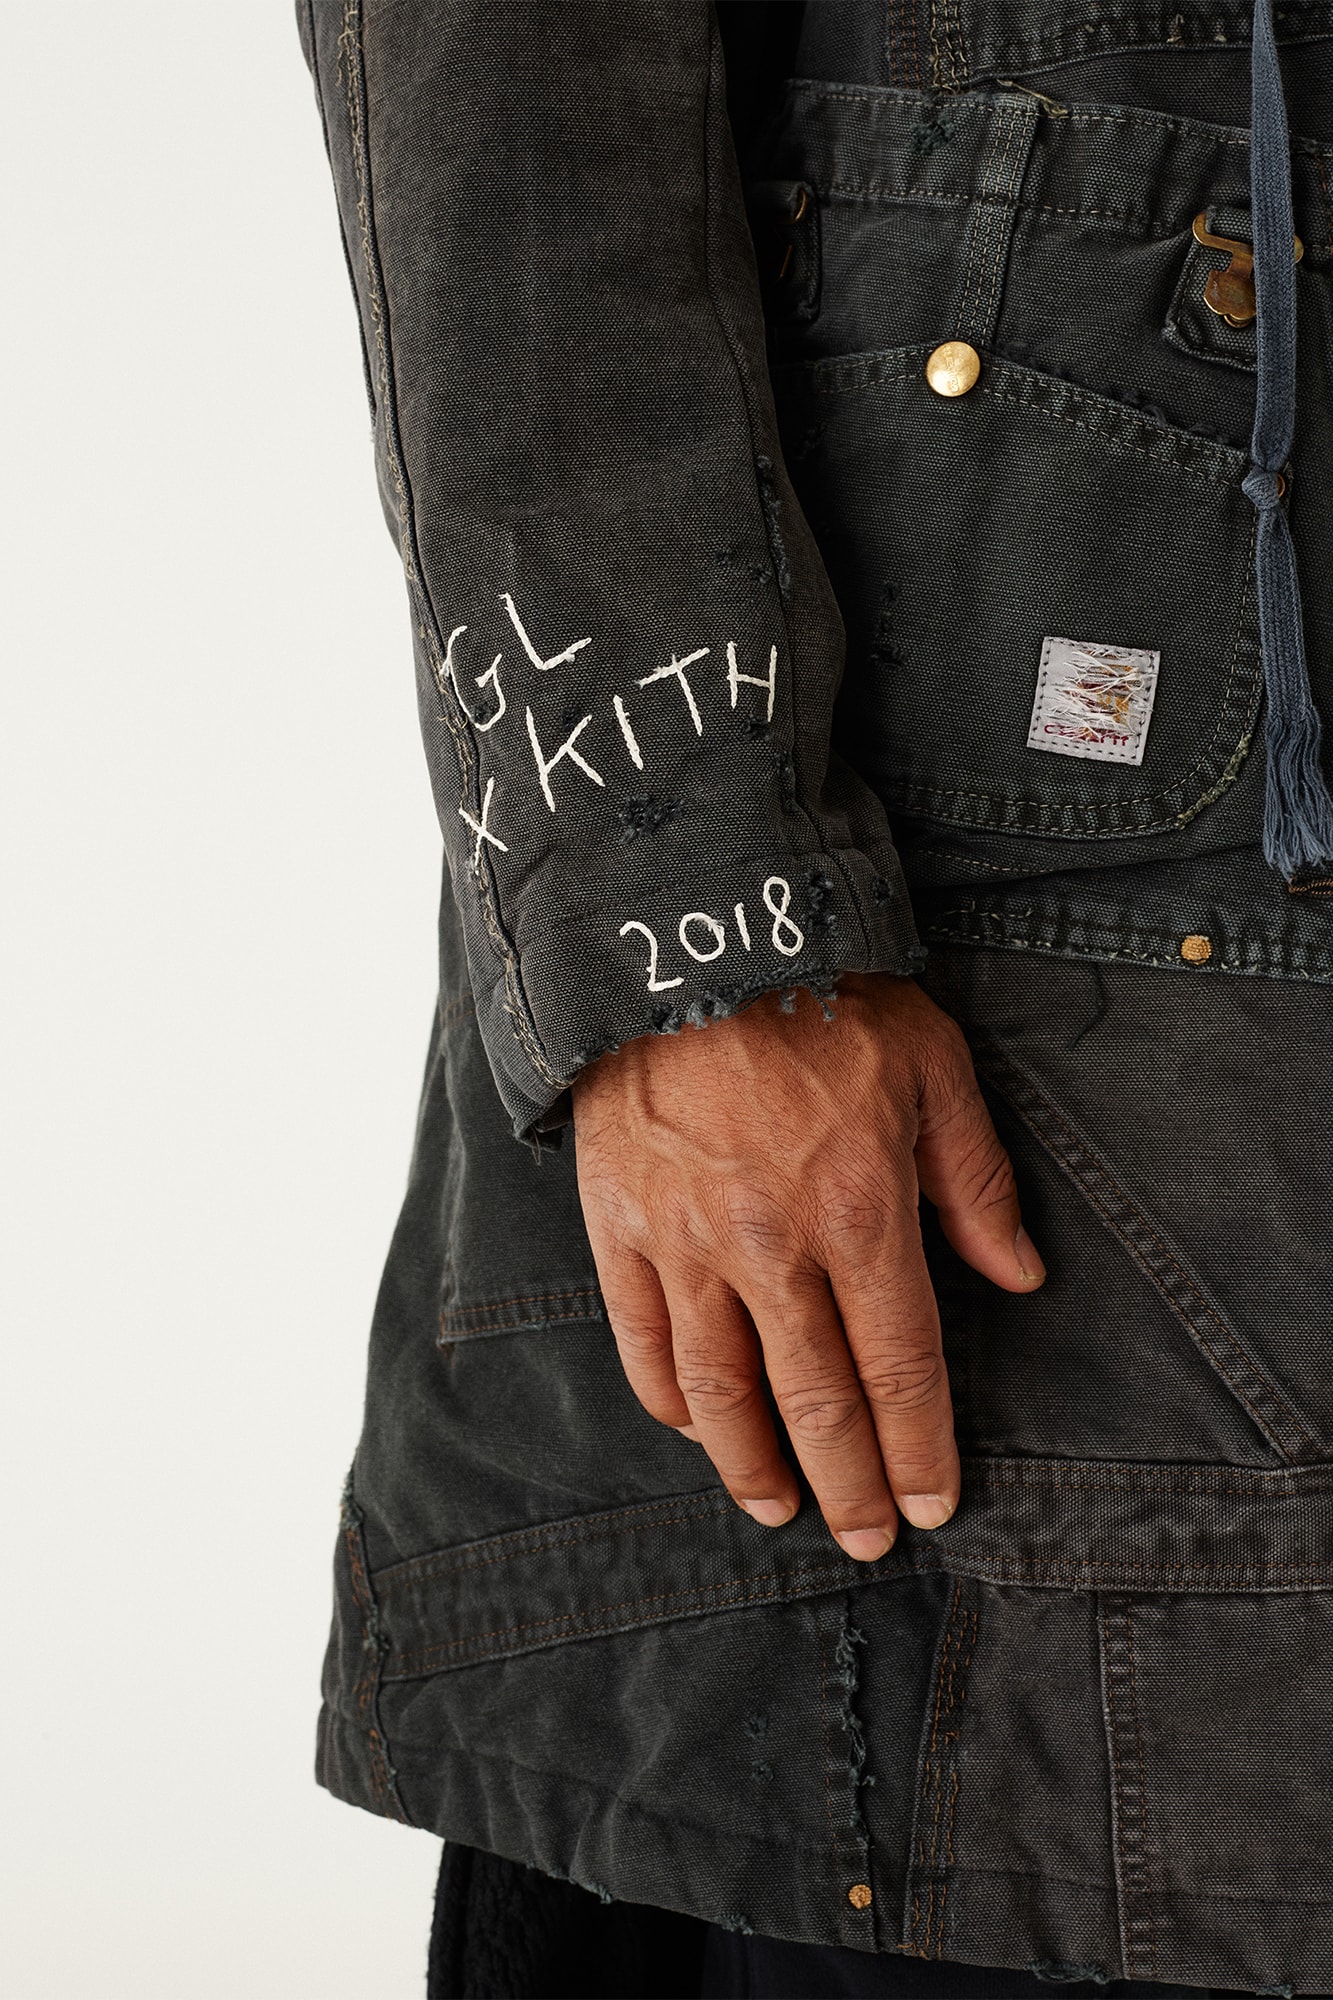 kith greg lauren ivy league draft collection 2018 november fashion ronnie fieg